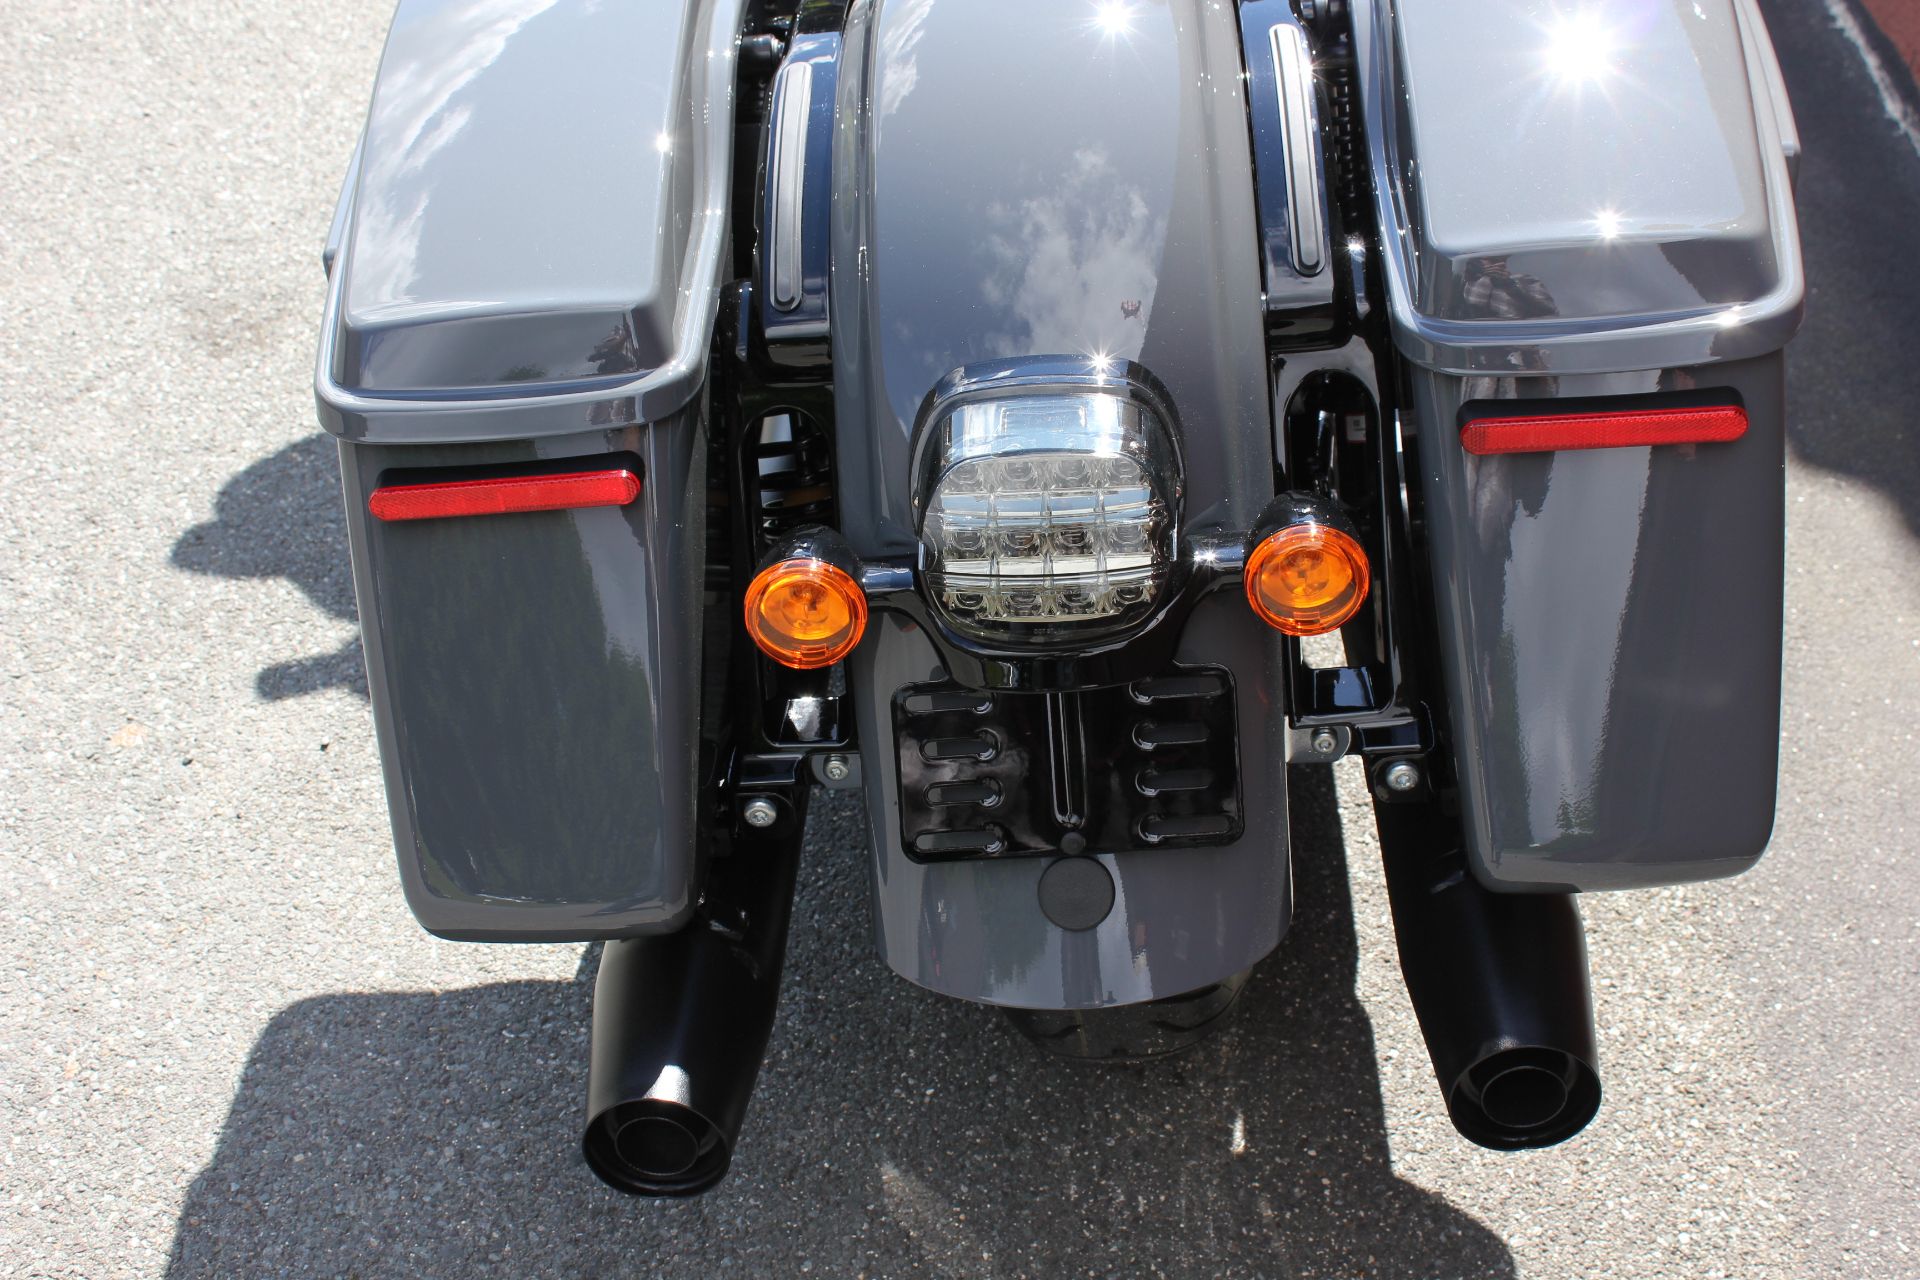 2022 Harley-Davidson Street Glide® ST in Pittsfield, Massachusetts - Photo 6